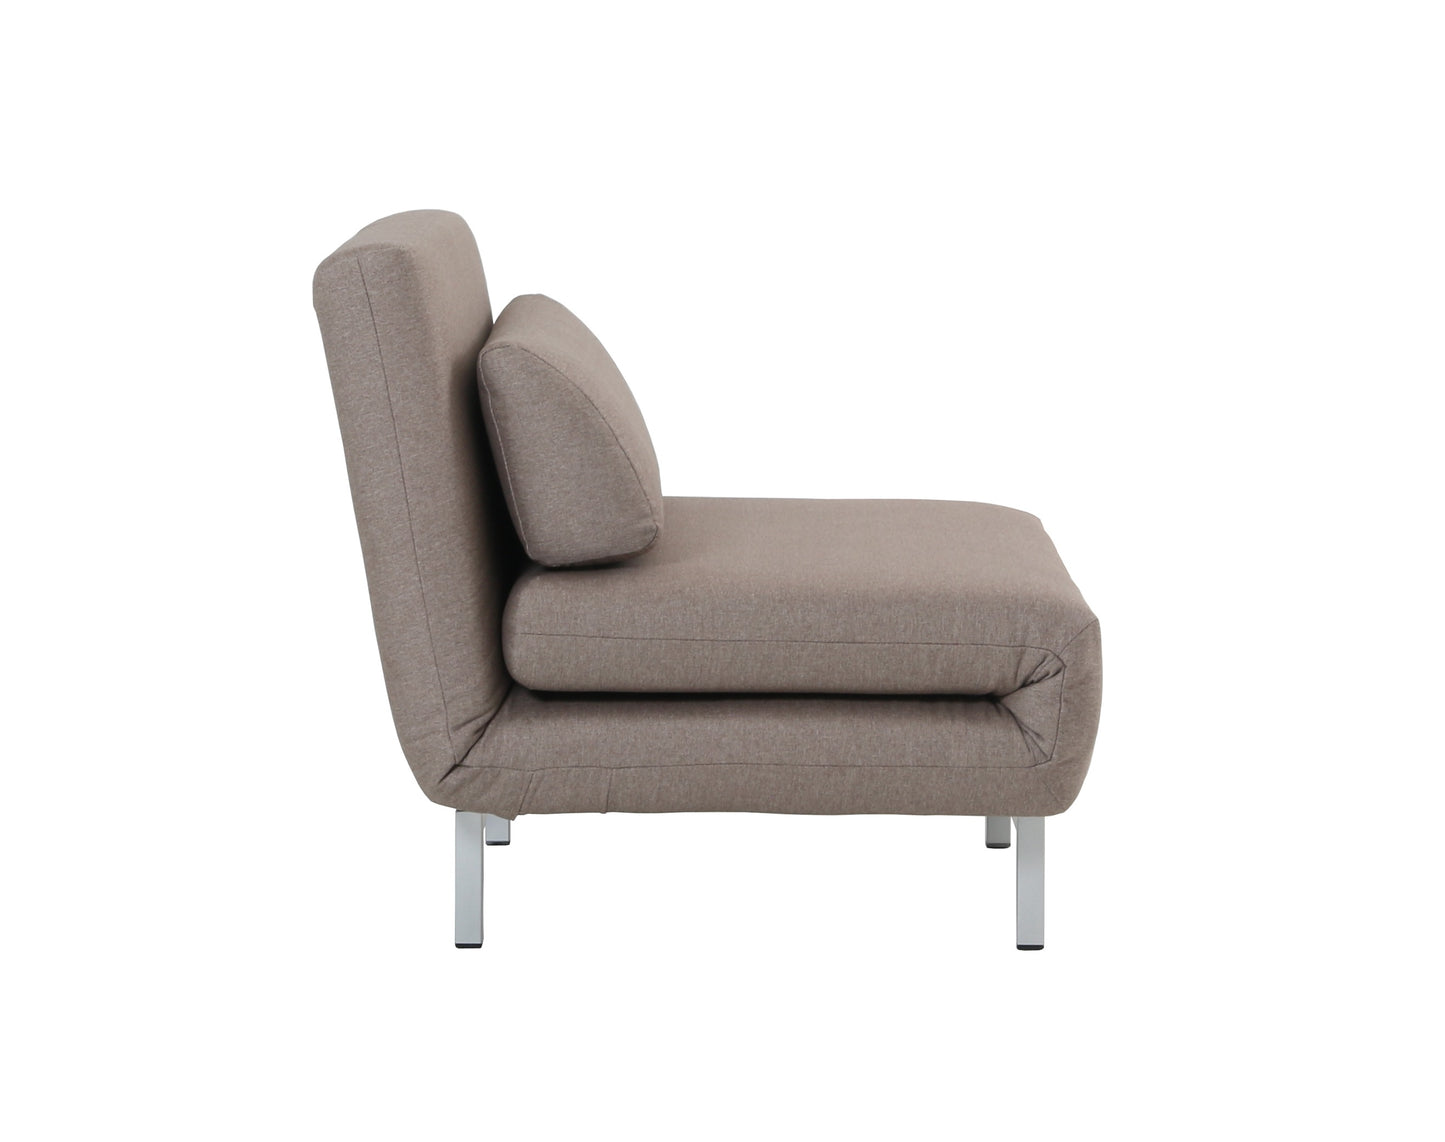 Premium Chair Bed Lk06-1 Beige Fabric by JM